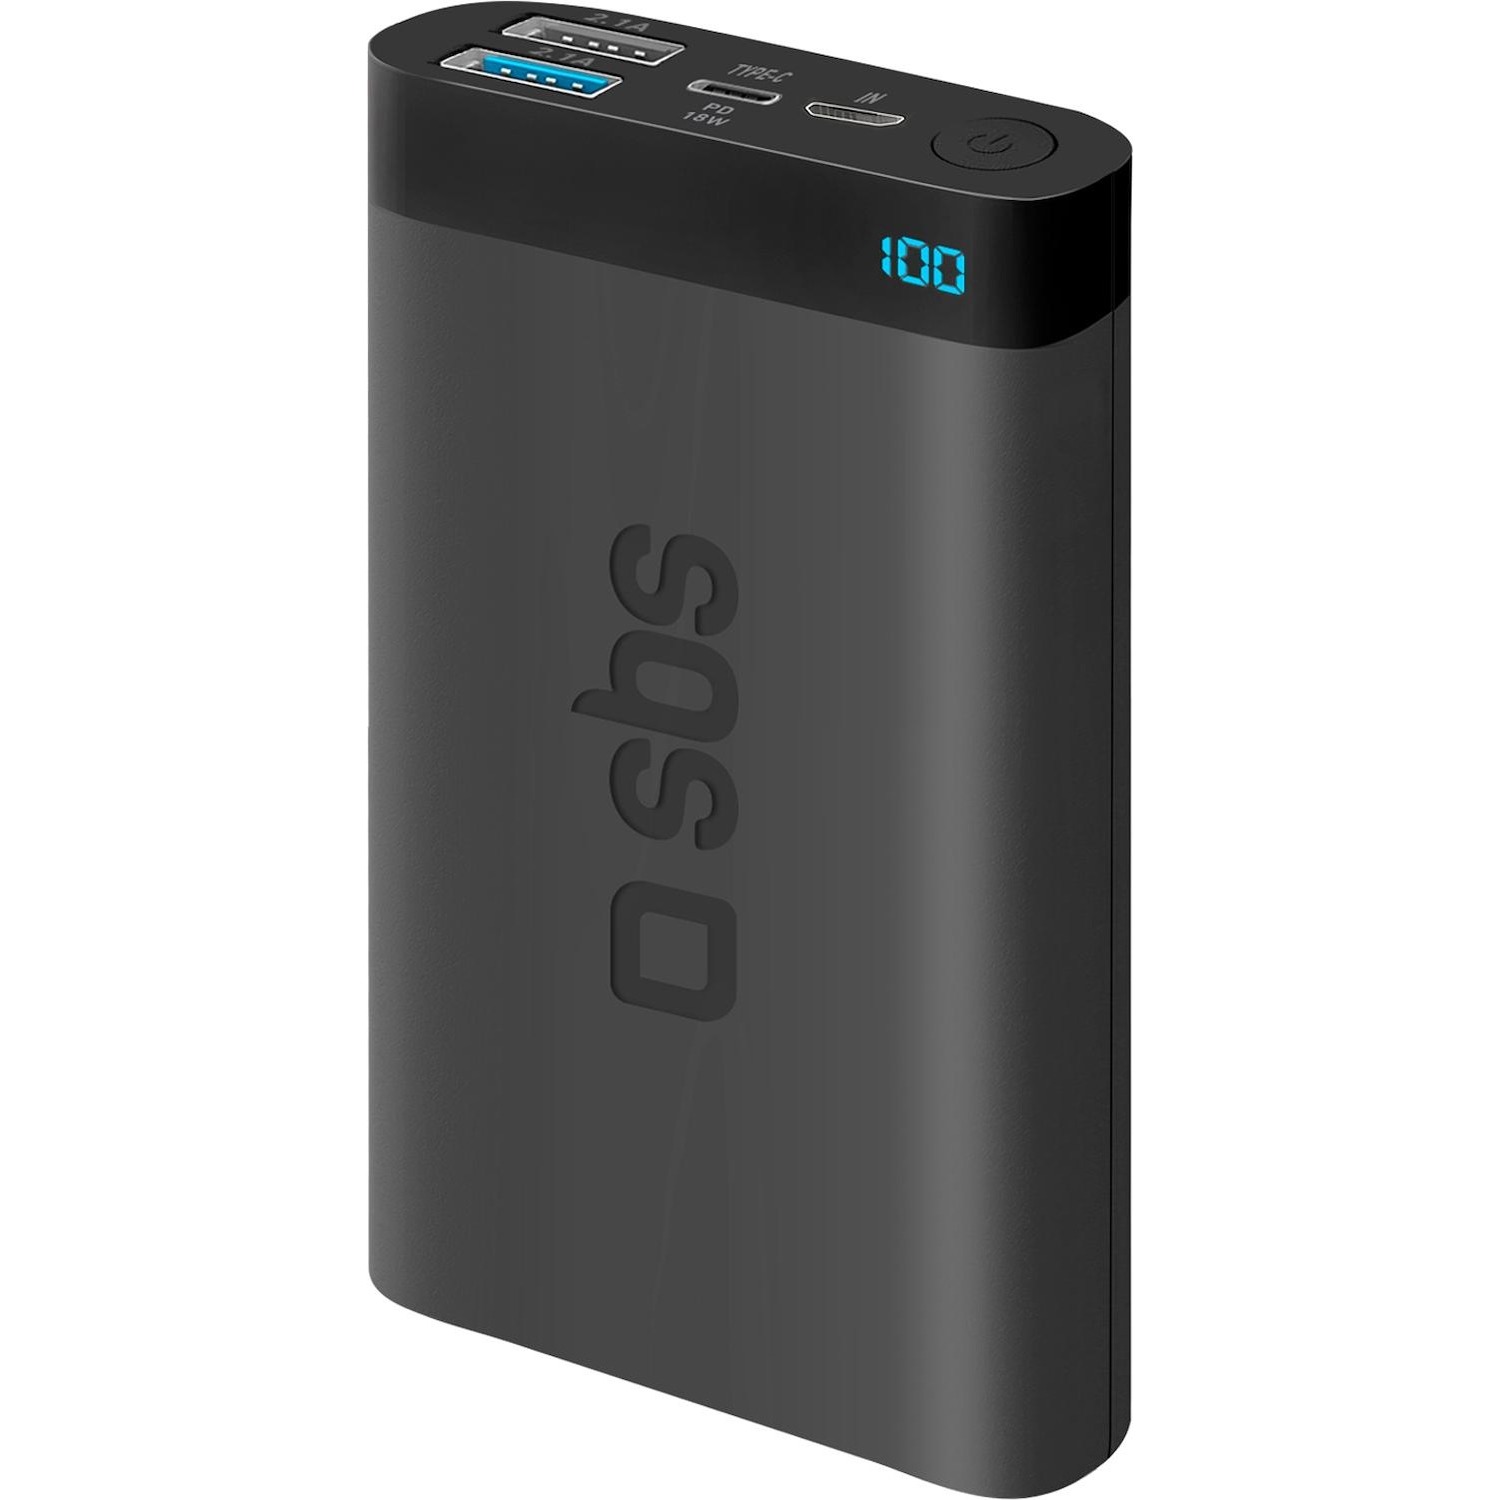 Caricabatterie portatile a ricarica rapida SBS serie pocket con display LED  e capacita'10000 mAh - DIMOStore